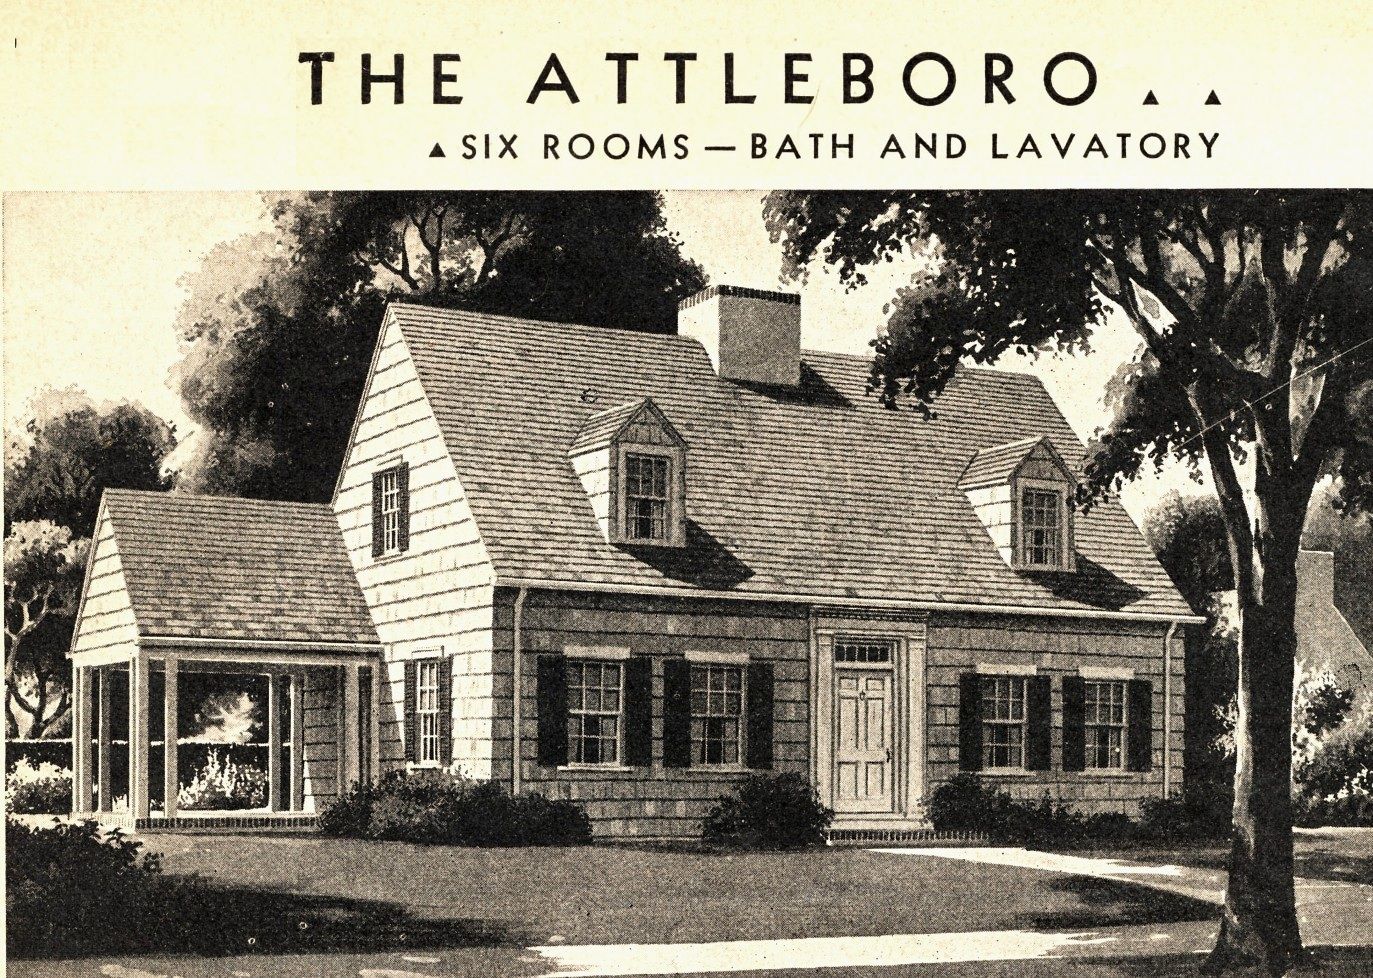 Sears Attleboro, as seen in the 1936 catalog.